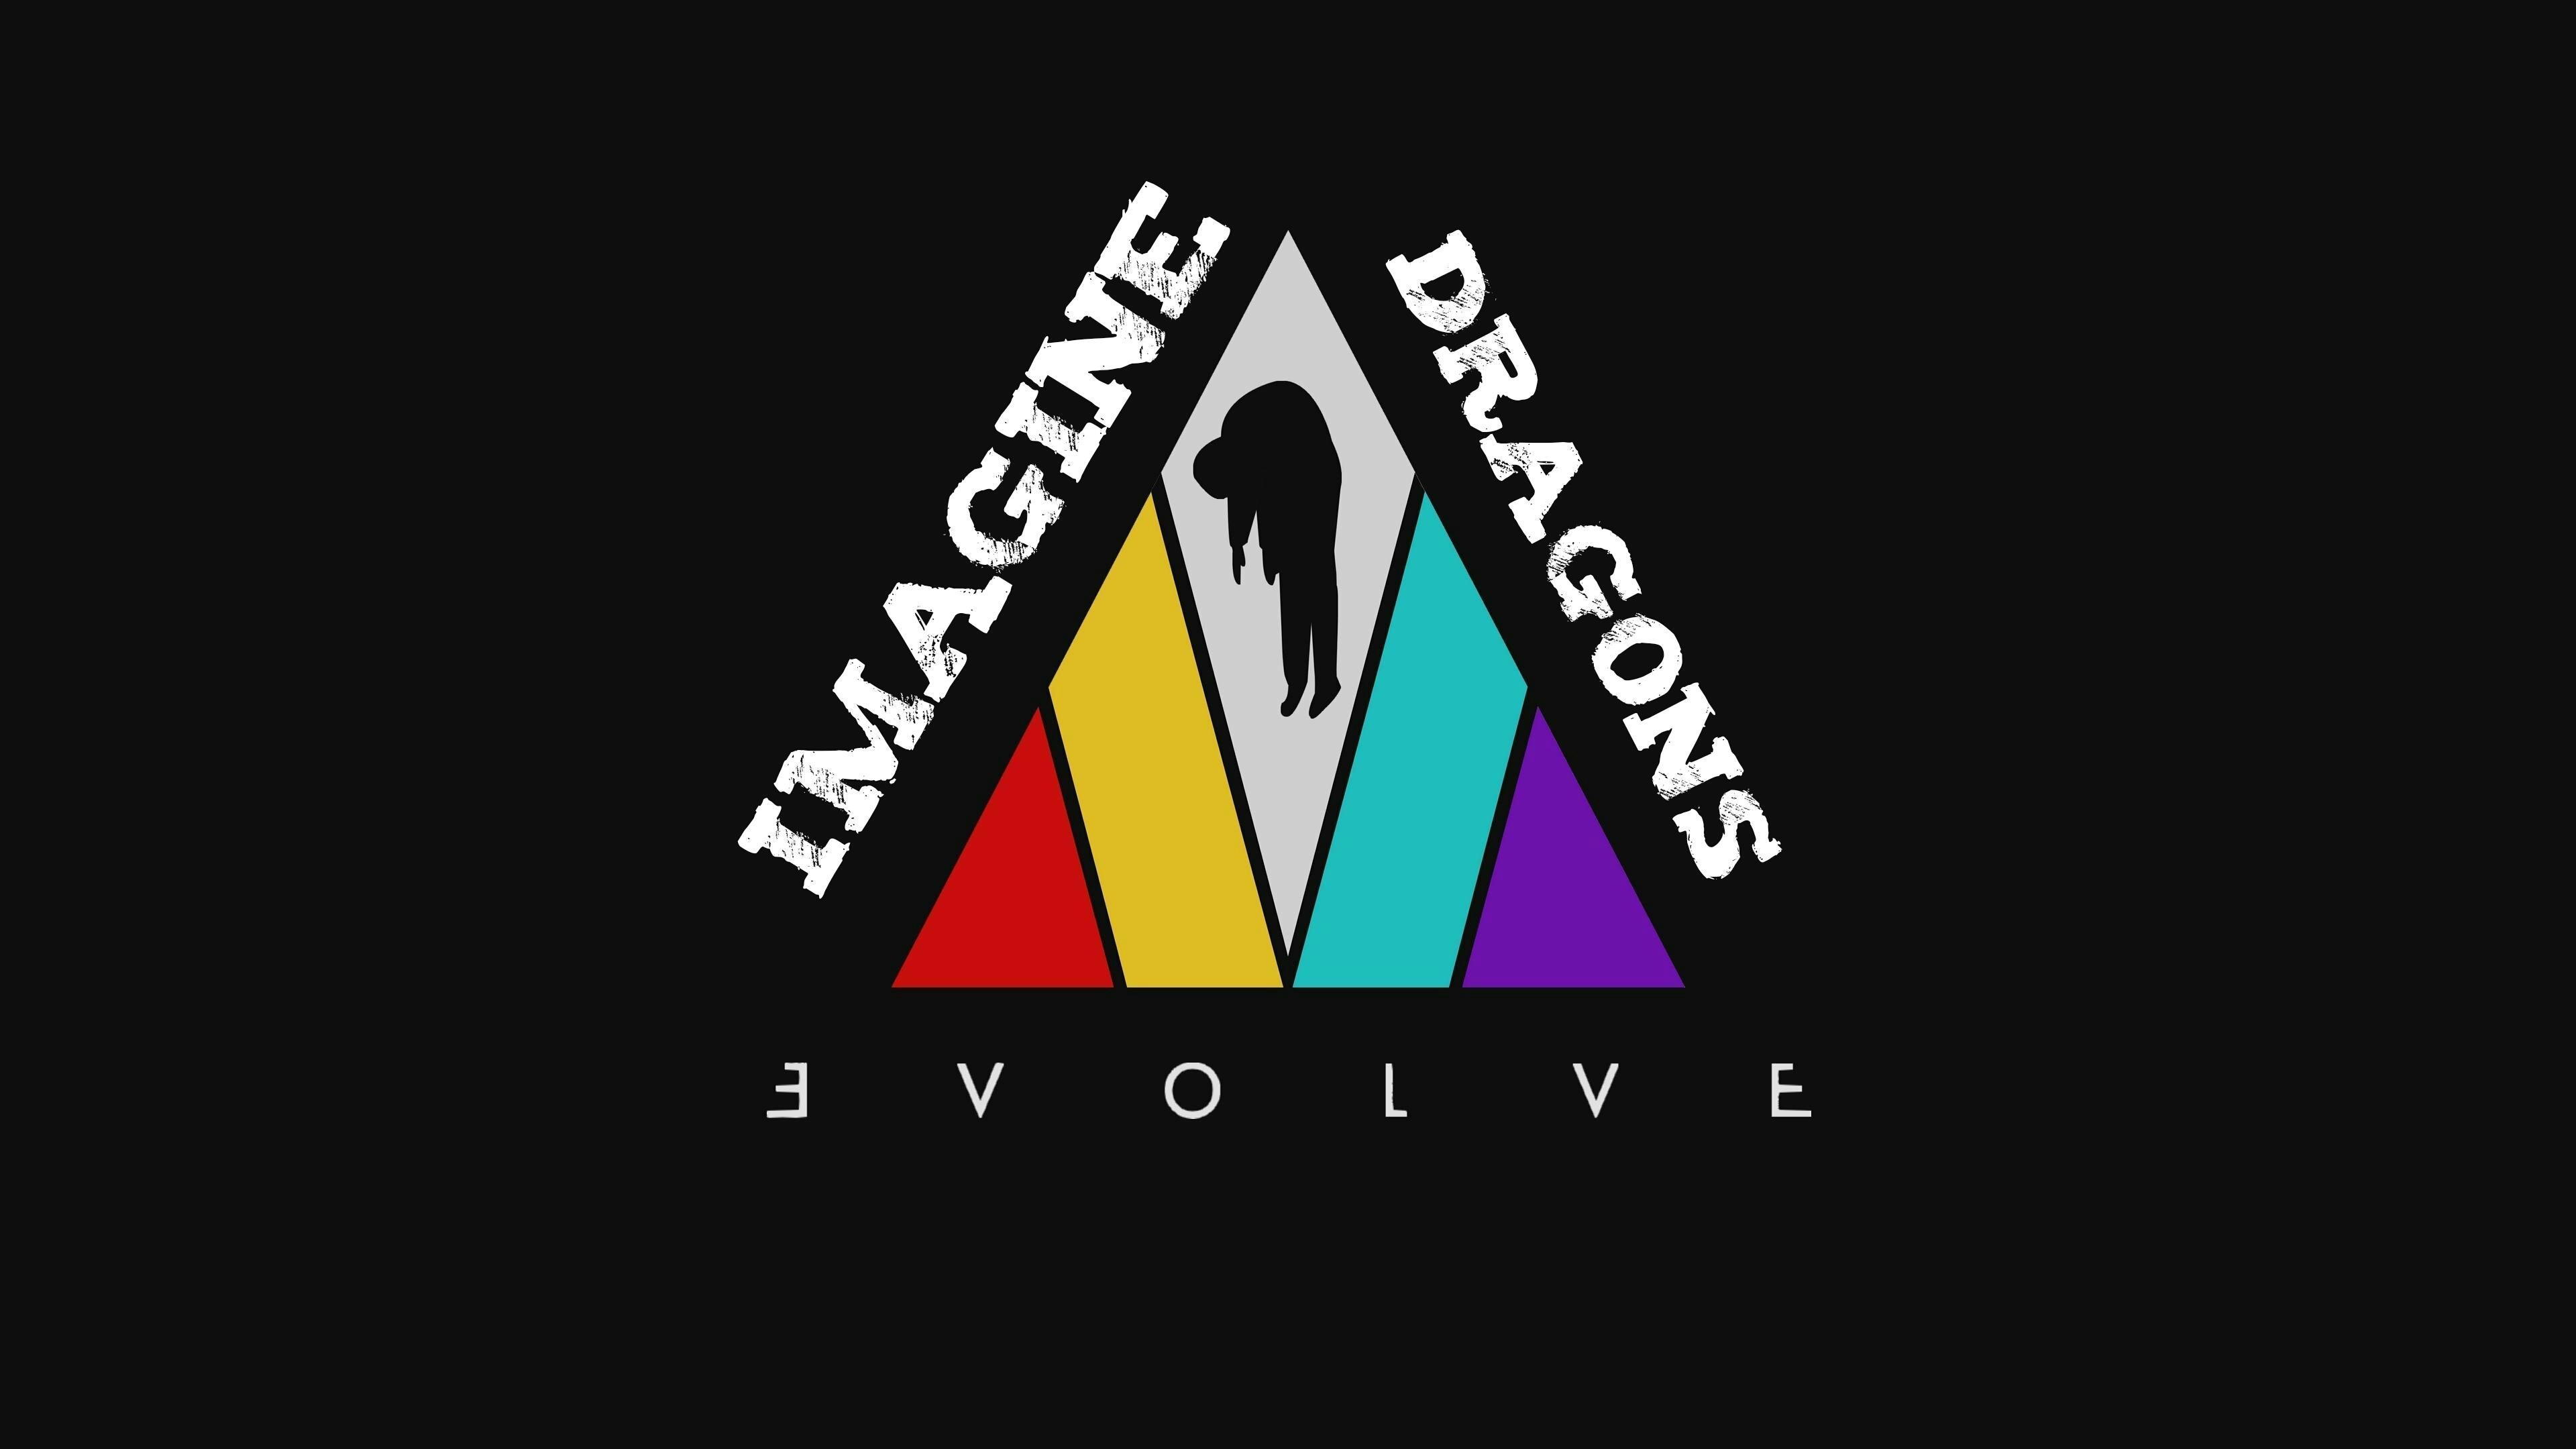 Imagine Dragons Logo - Is 